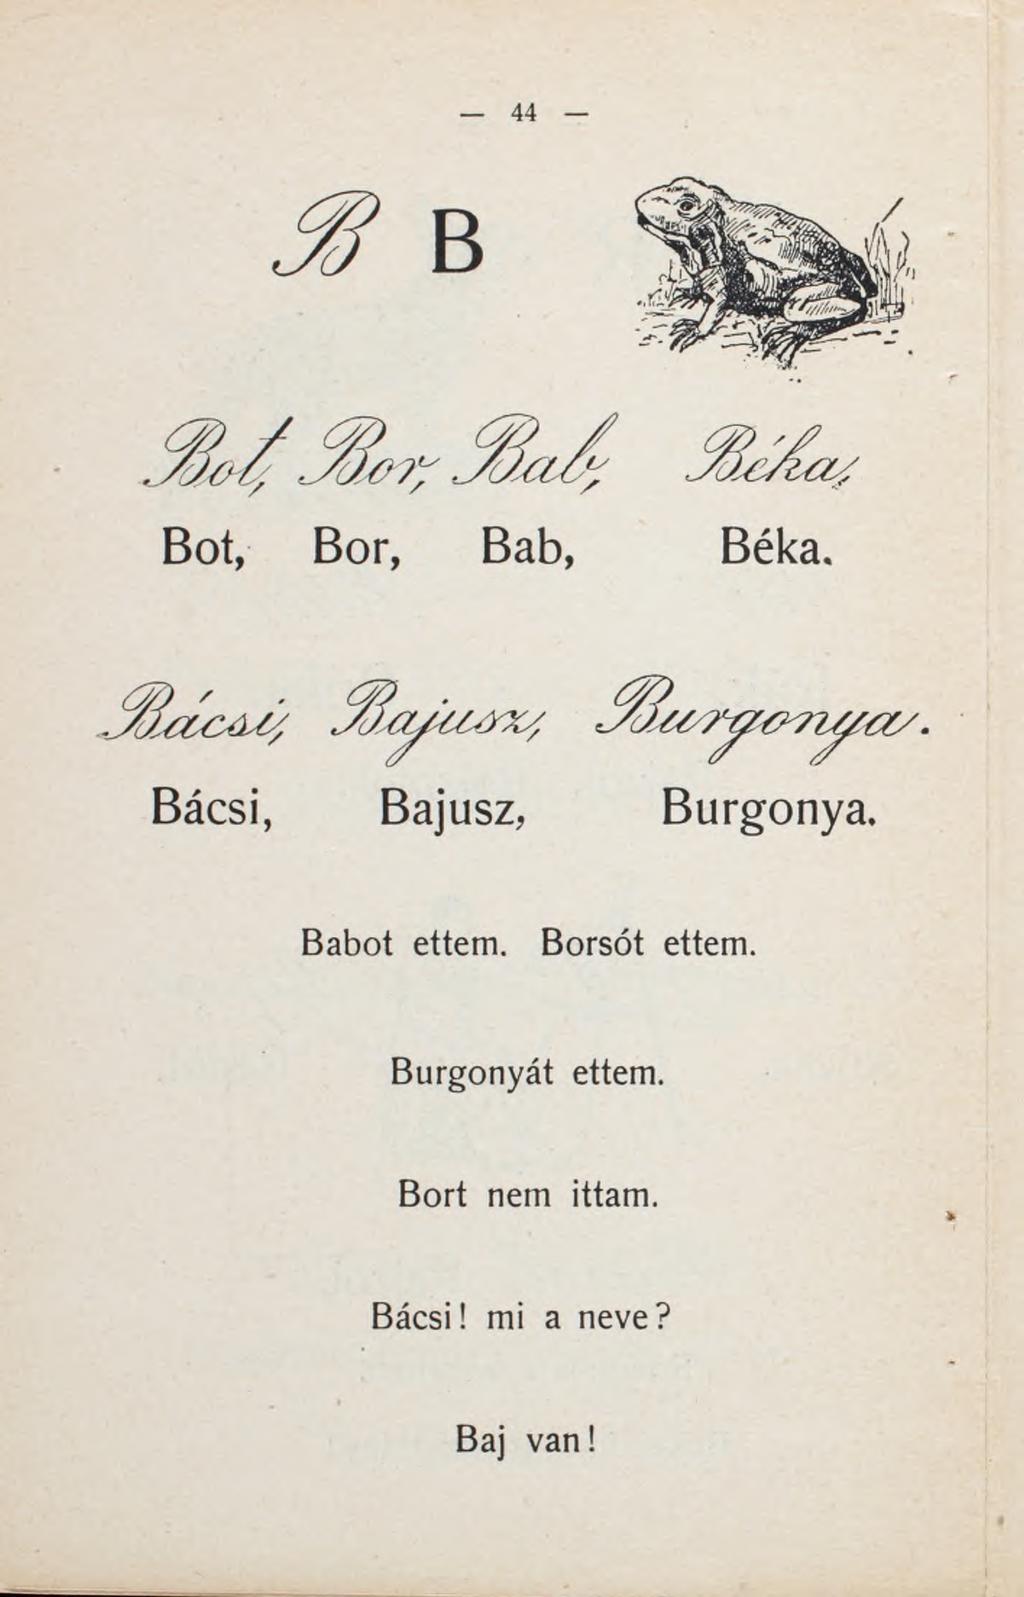 B Bot, Bor, Bab, Béka. Bácsi, Bajusz, Burgonya. Babot ettem.